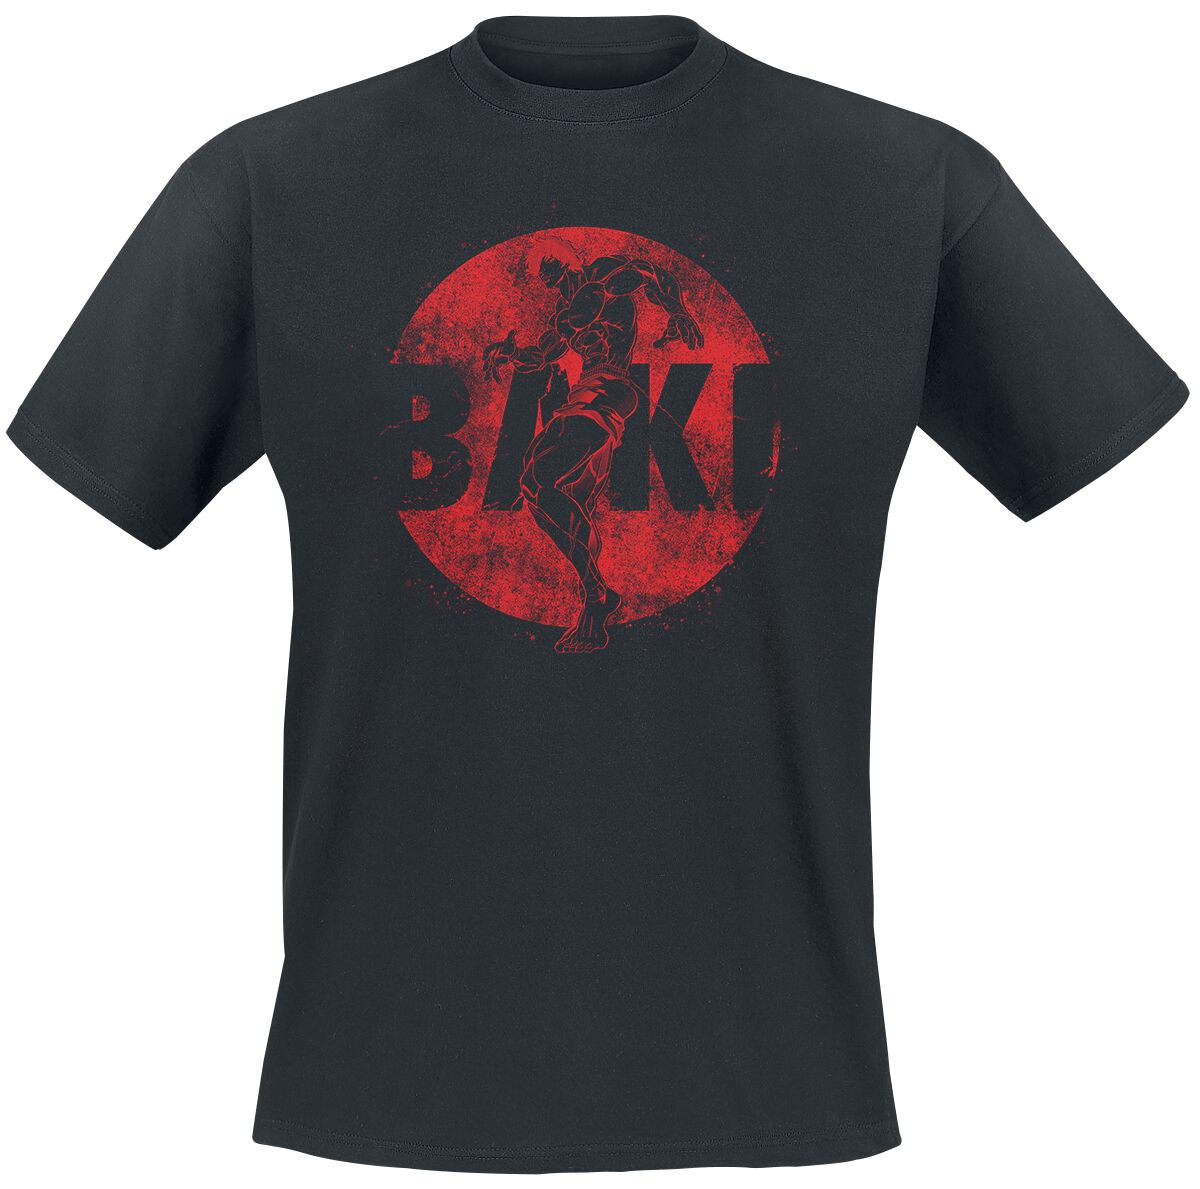 Baki Red Circle T-Shirt black